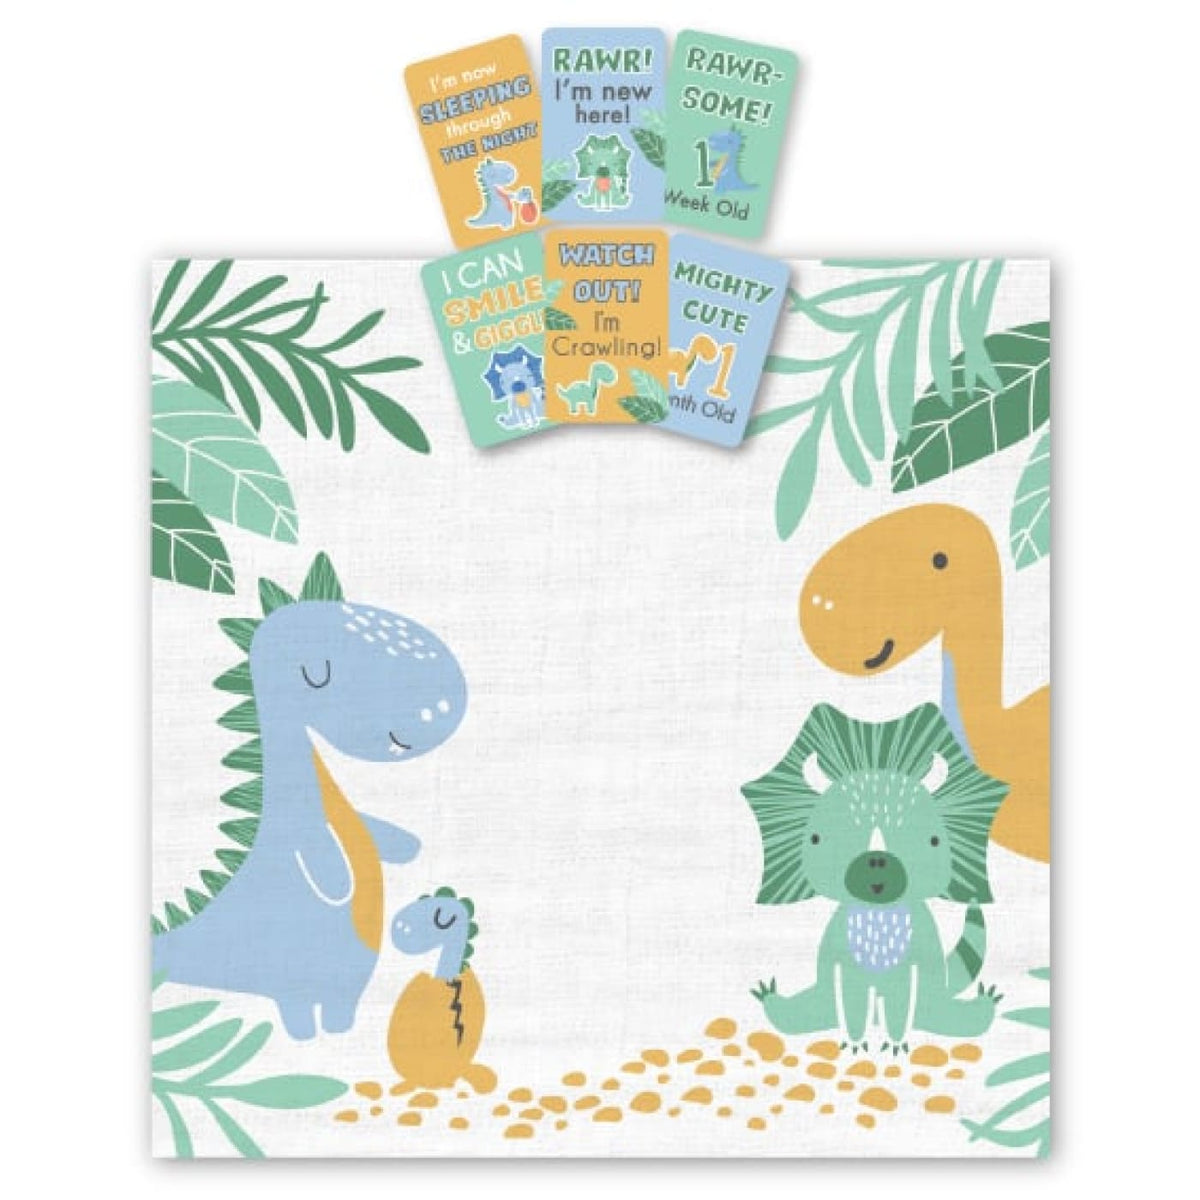 Jiggle &amp; Giggle Cotton Muslin Blanket and Baby Milestone Photo Cards Set - Dinosaurs - Dinosaurs - GIFTWARE - MILESTONE BLOCKS/CARDS